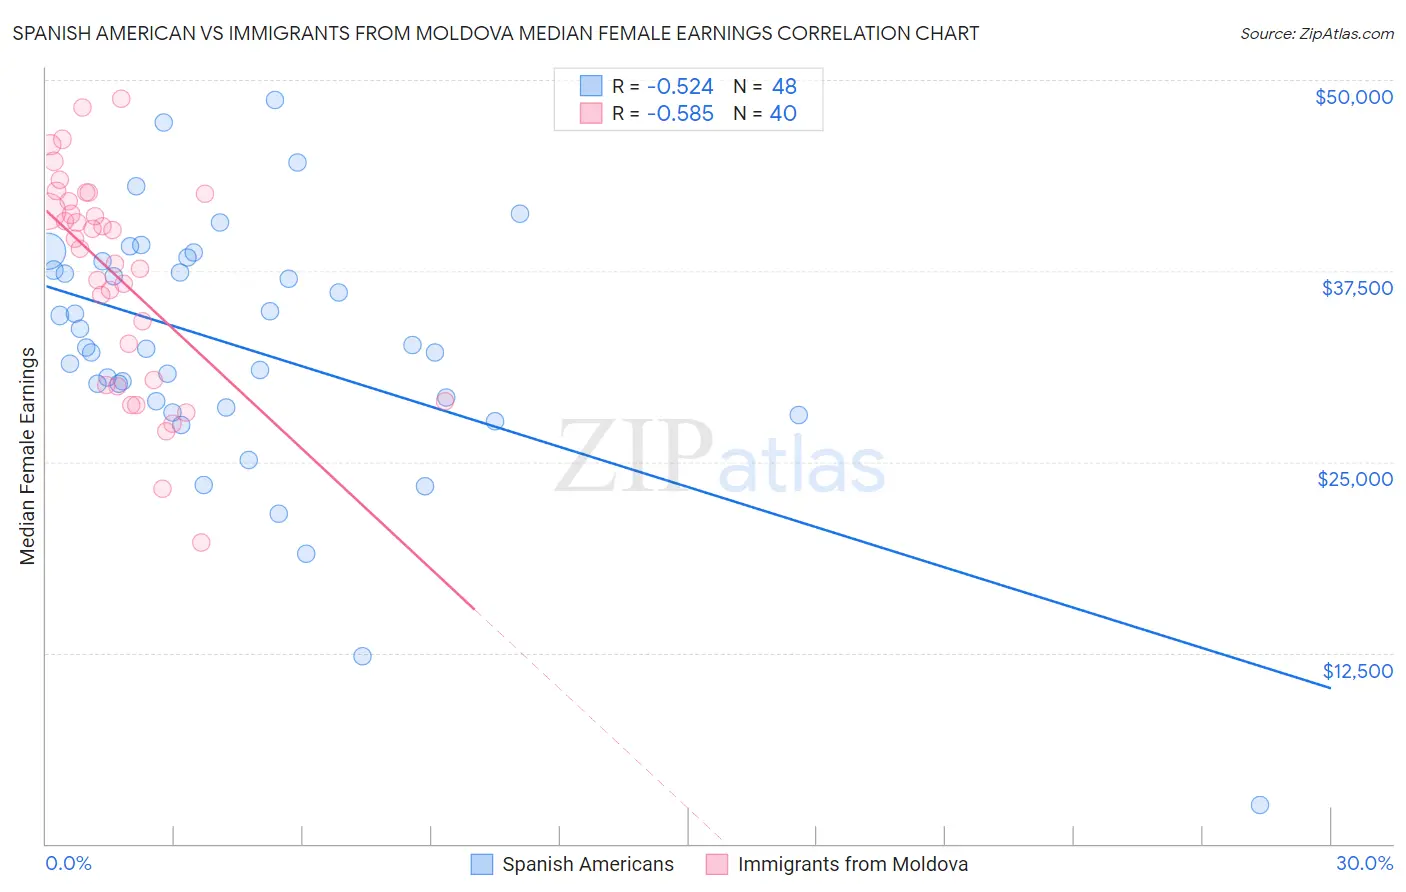 Spanish American vs Immigrants from Moldova Median Female Earnings